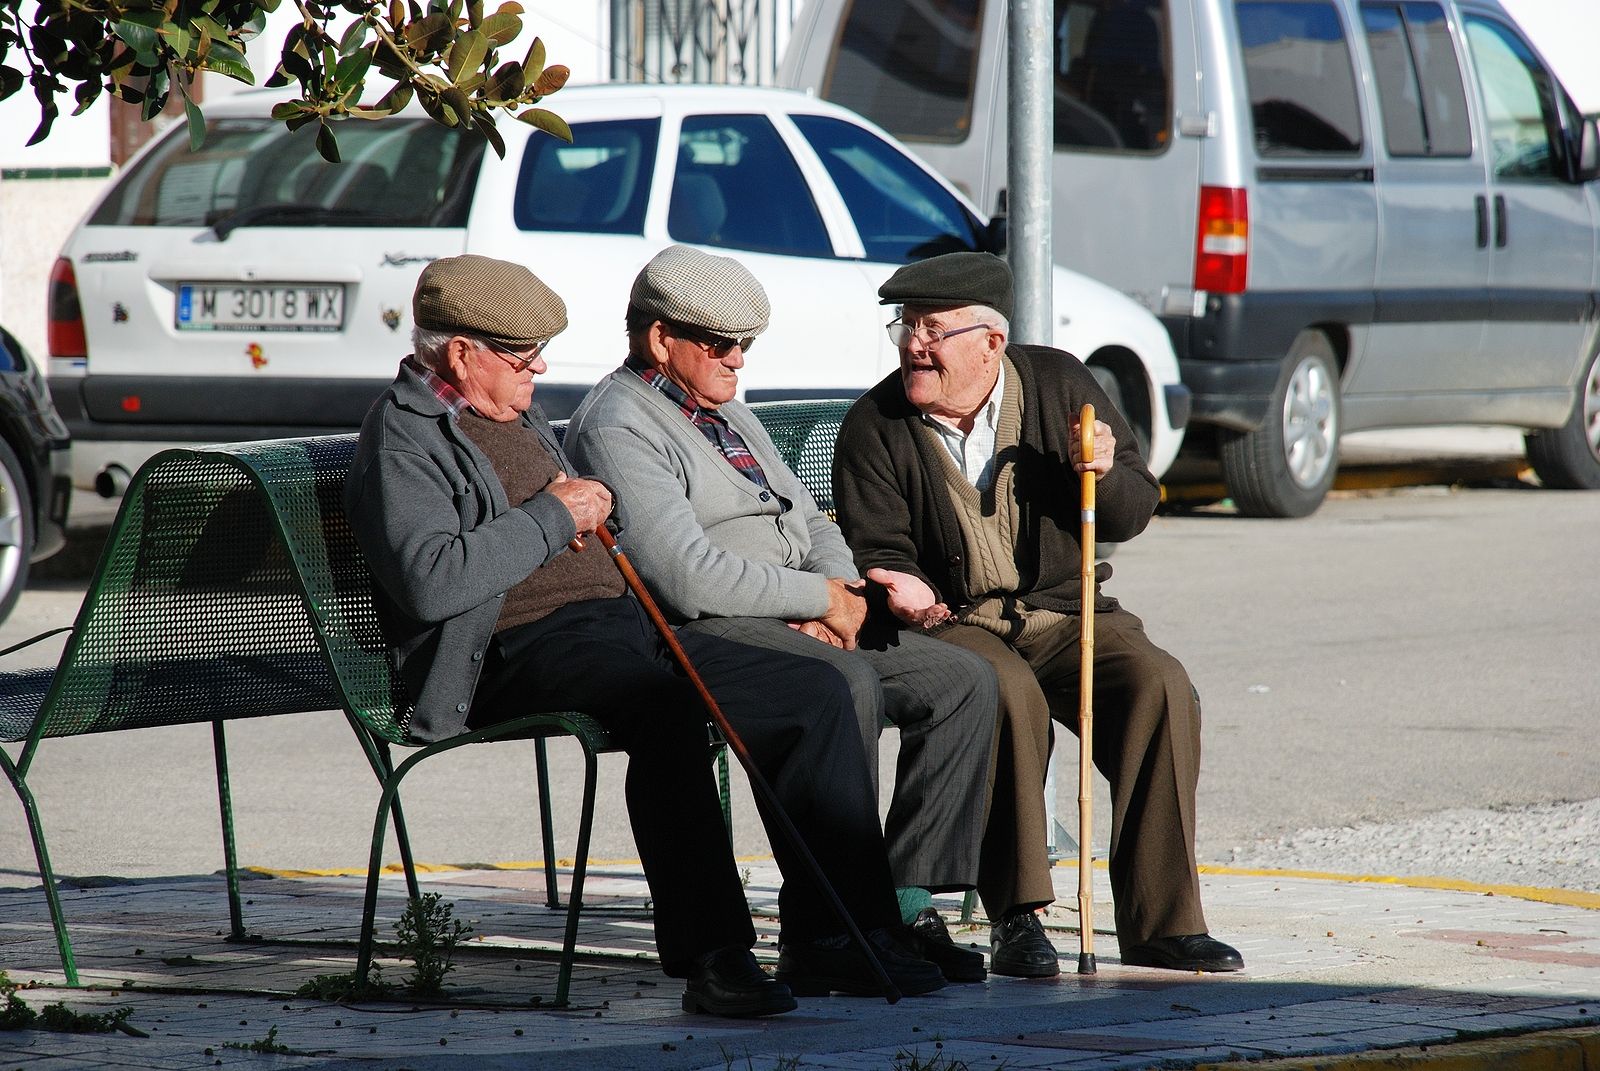 España bate el récord de esperanza de vida en Europa